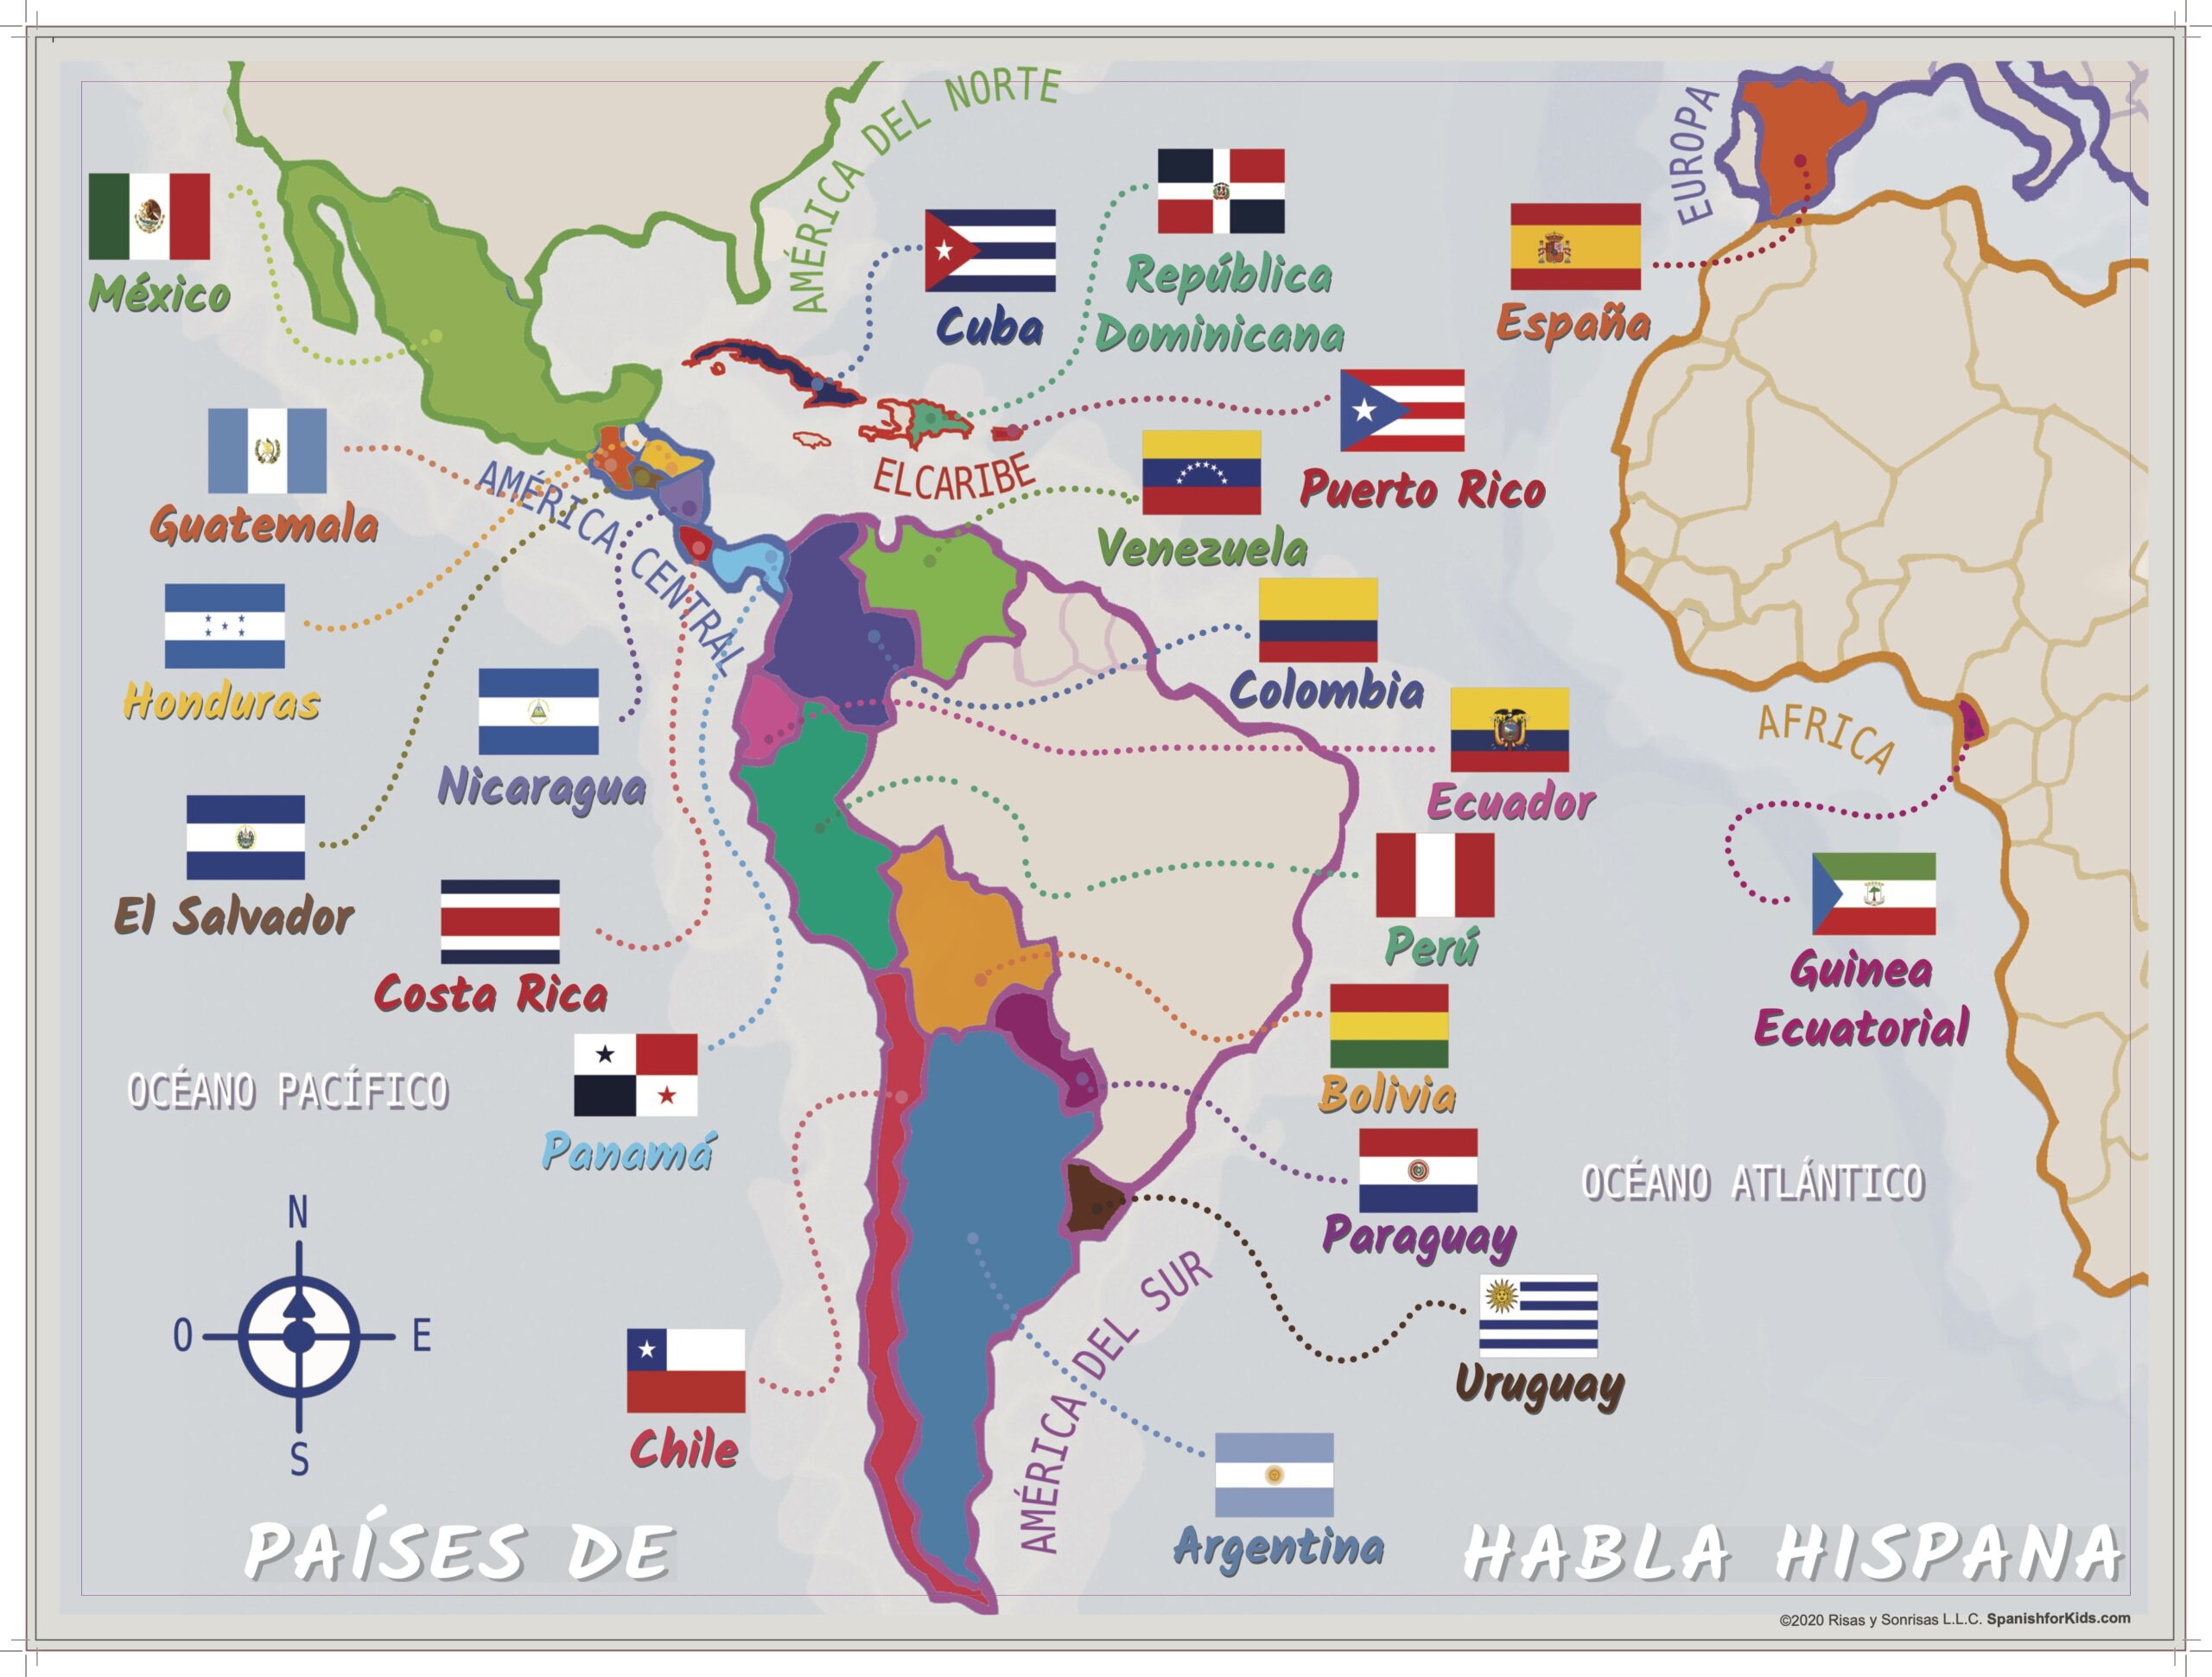 We celebrate the Spanish-speaking countries around the world during Hispanic Heritage Month.